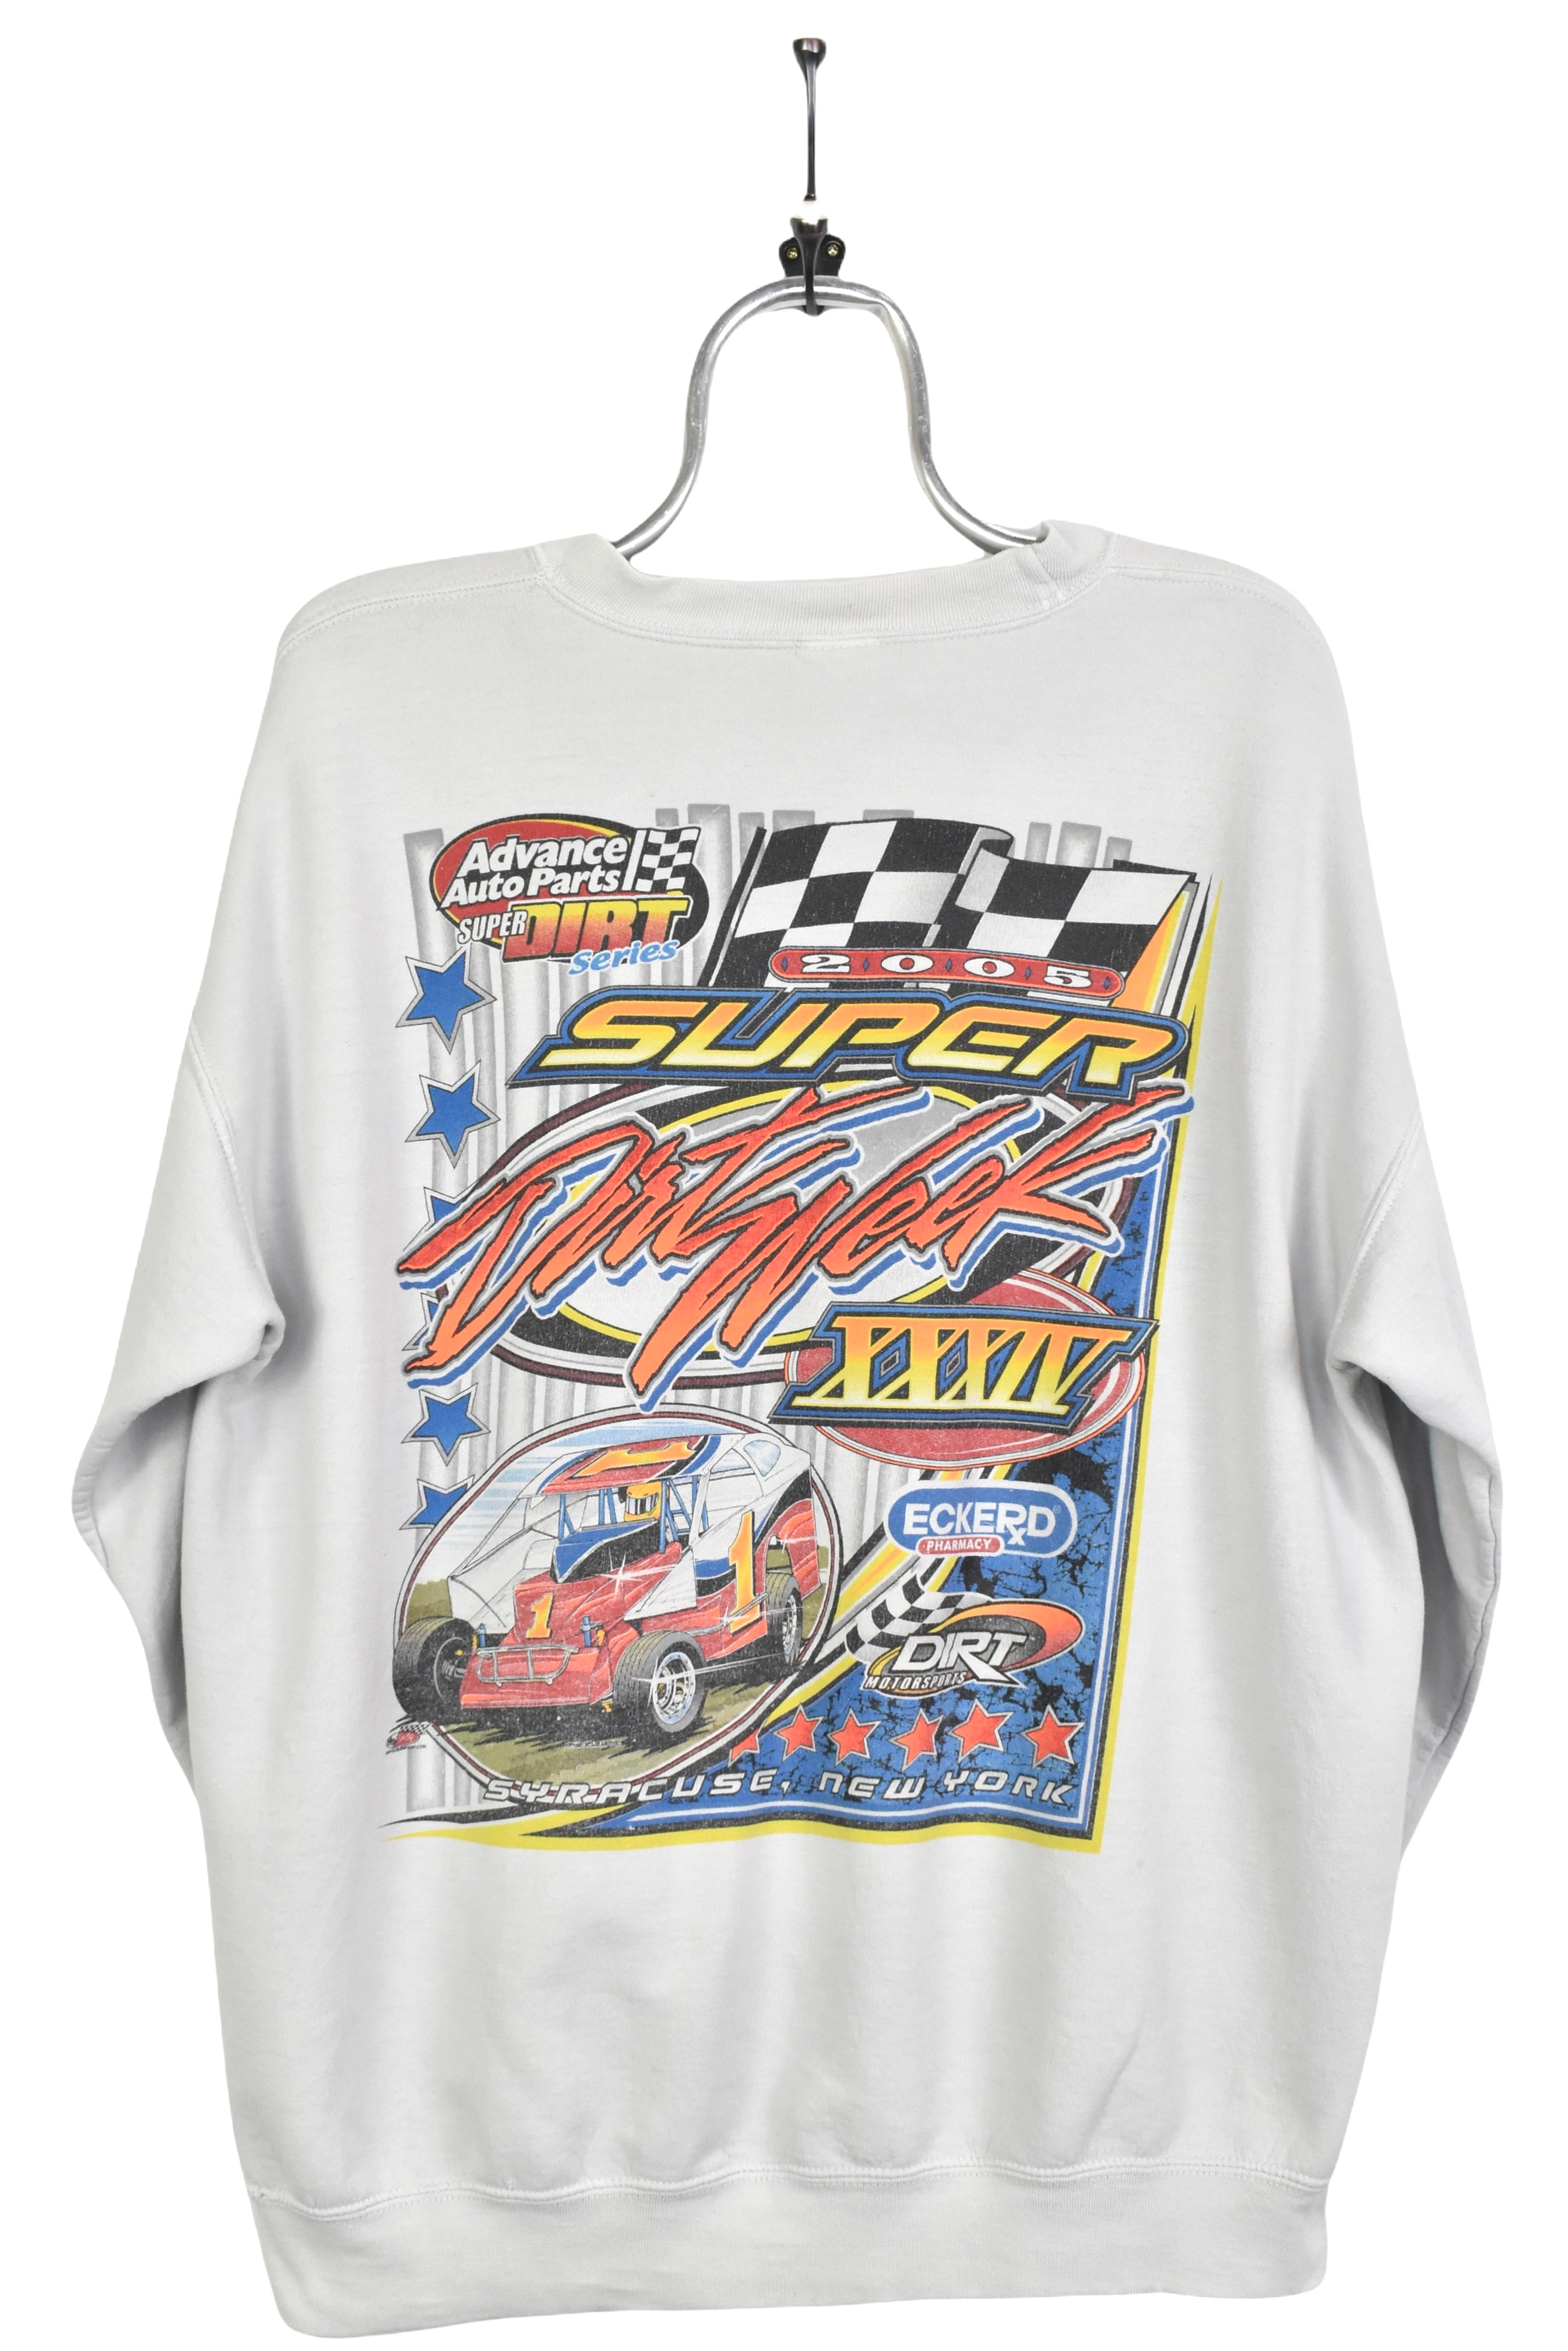 Vintage Super Dirt Series racing grey sweatshirt | XL NASCAR / RACING